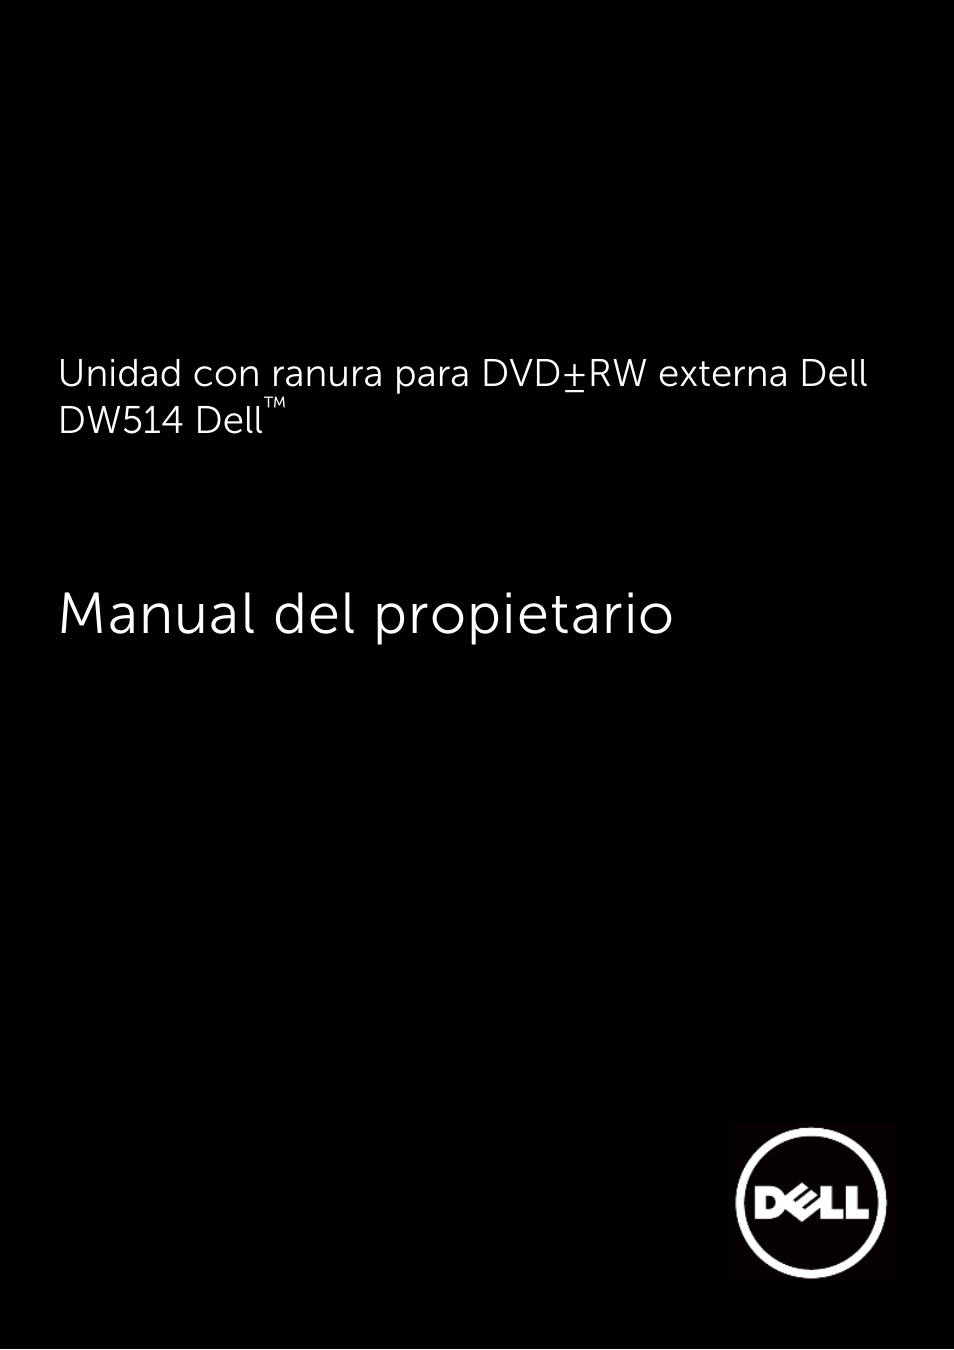 Dell External USB Ultra Slim DVD +/-RW Slot Drive DW514 Manual del usuario | Páginas: 23